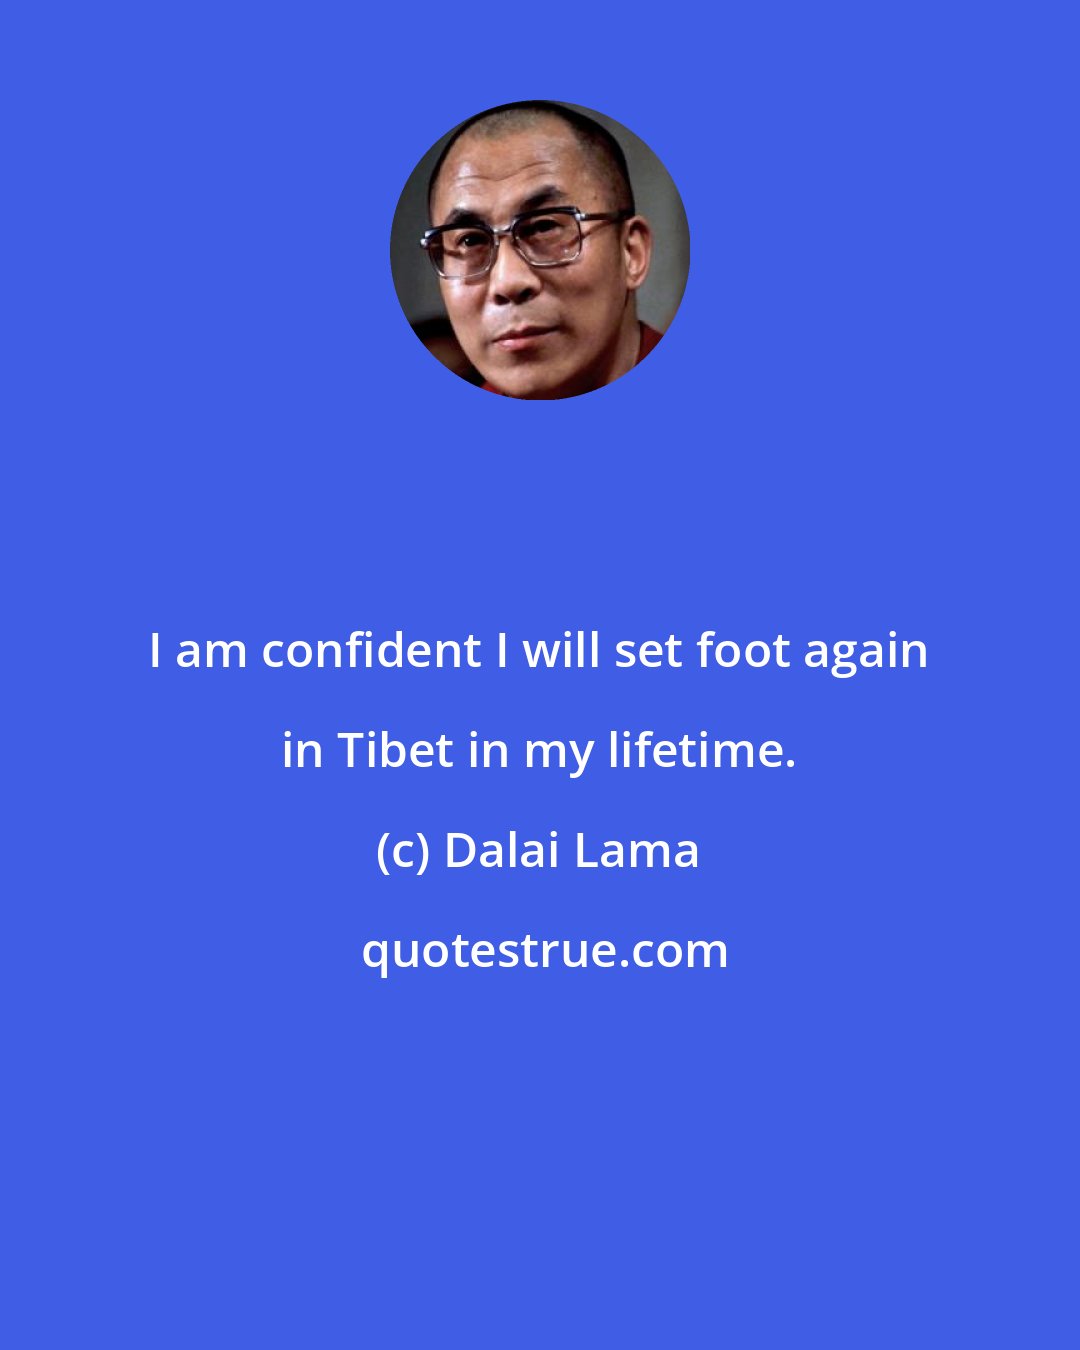 Dalai Lama: I am confident I will set foot again in Tibet in my lifetime.